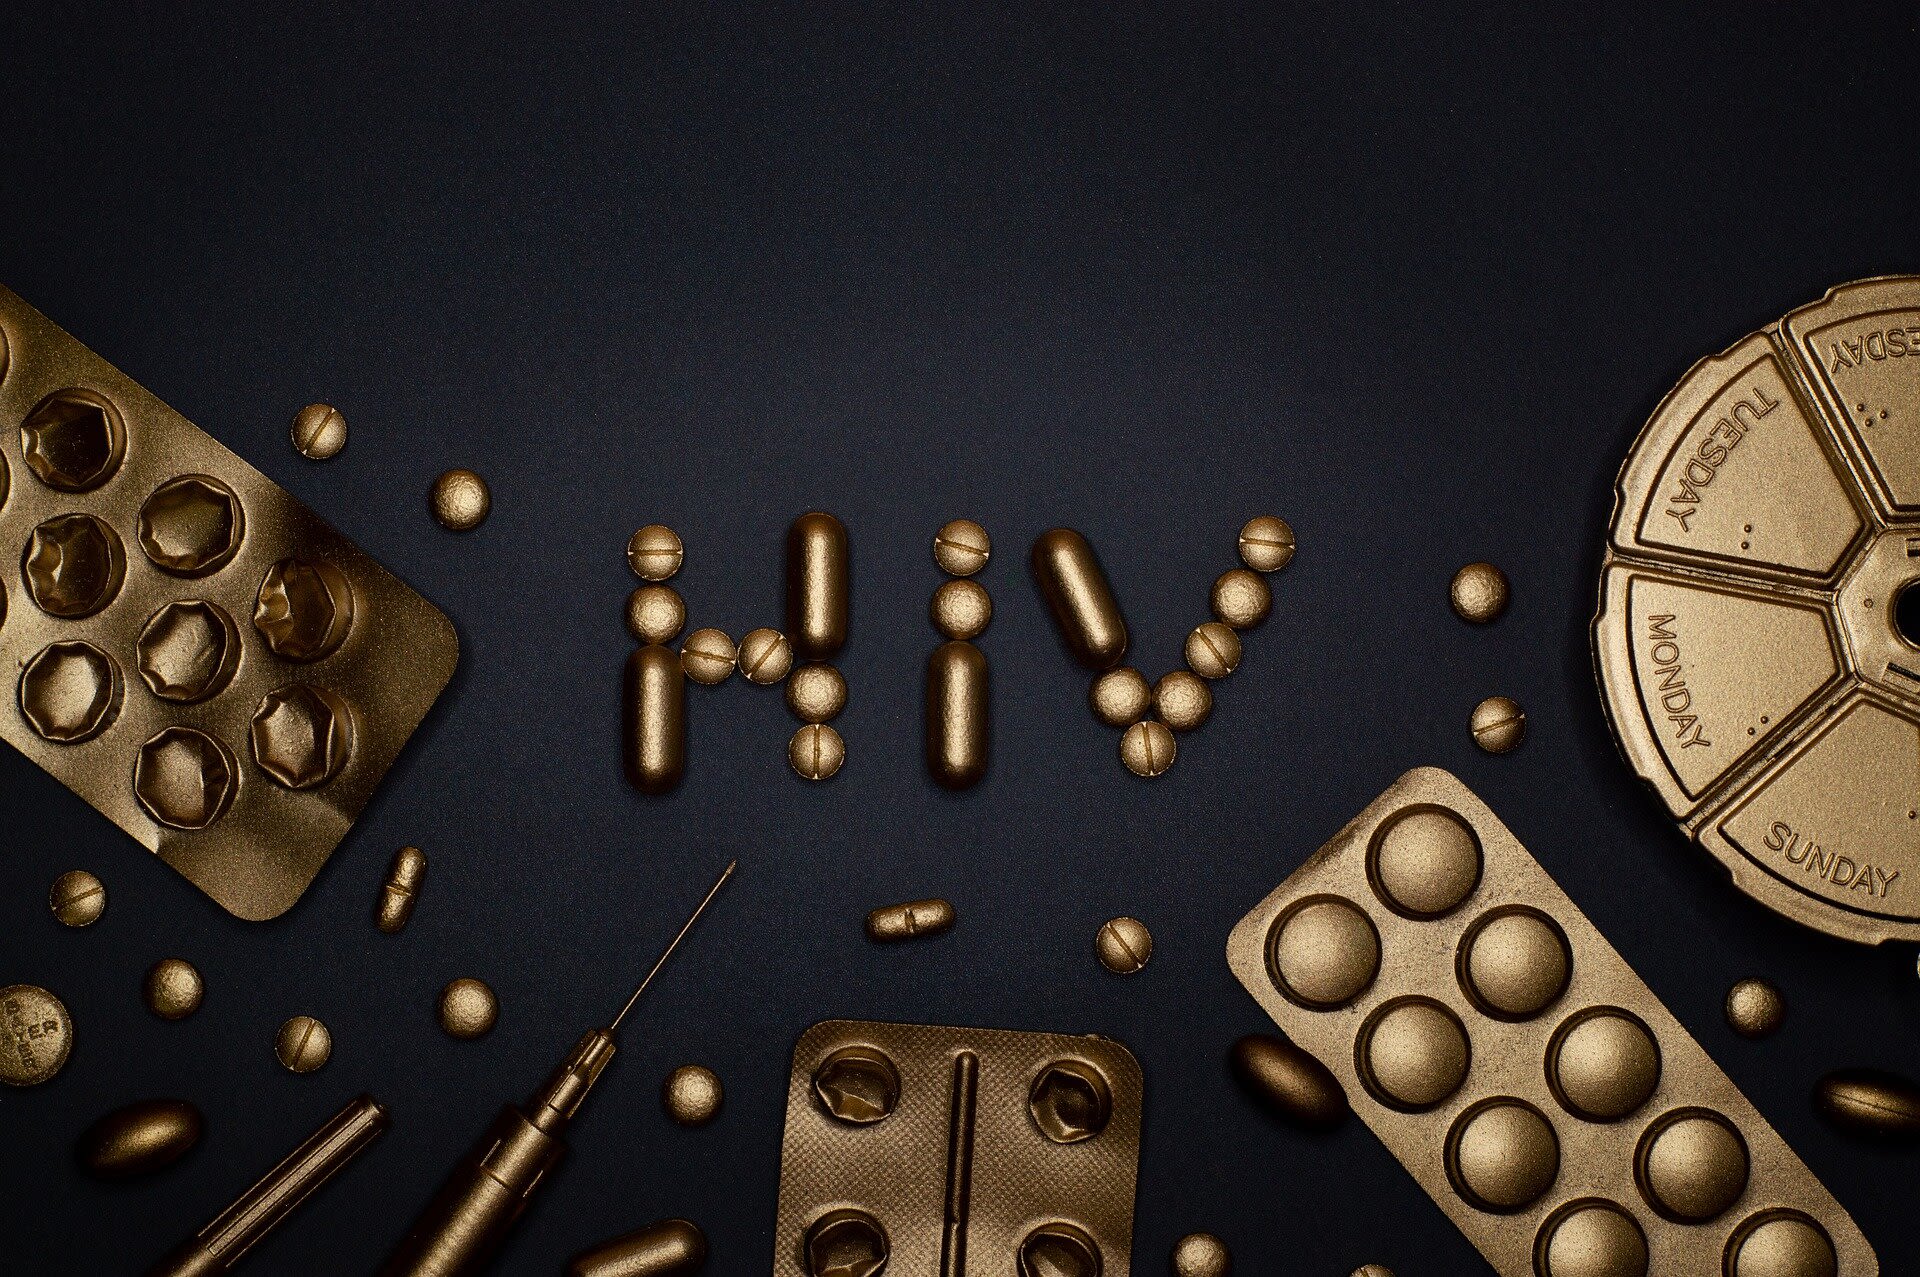 Group-based interventions address HIV stigma